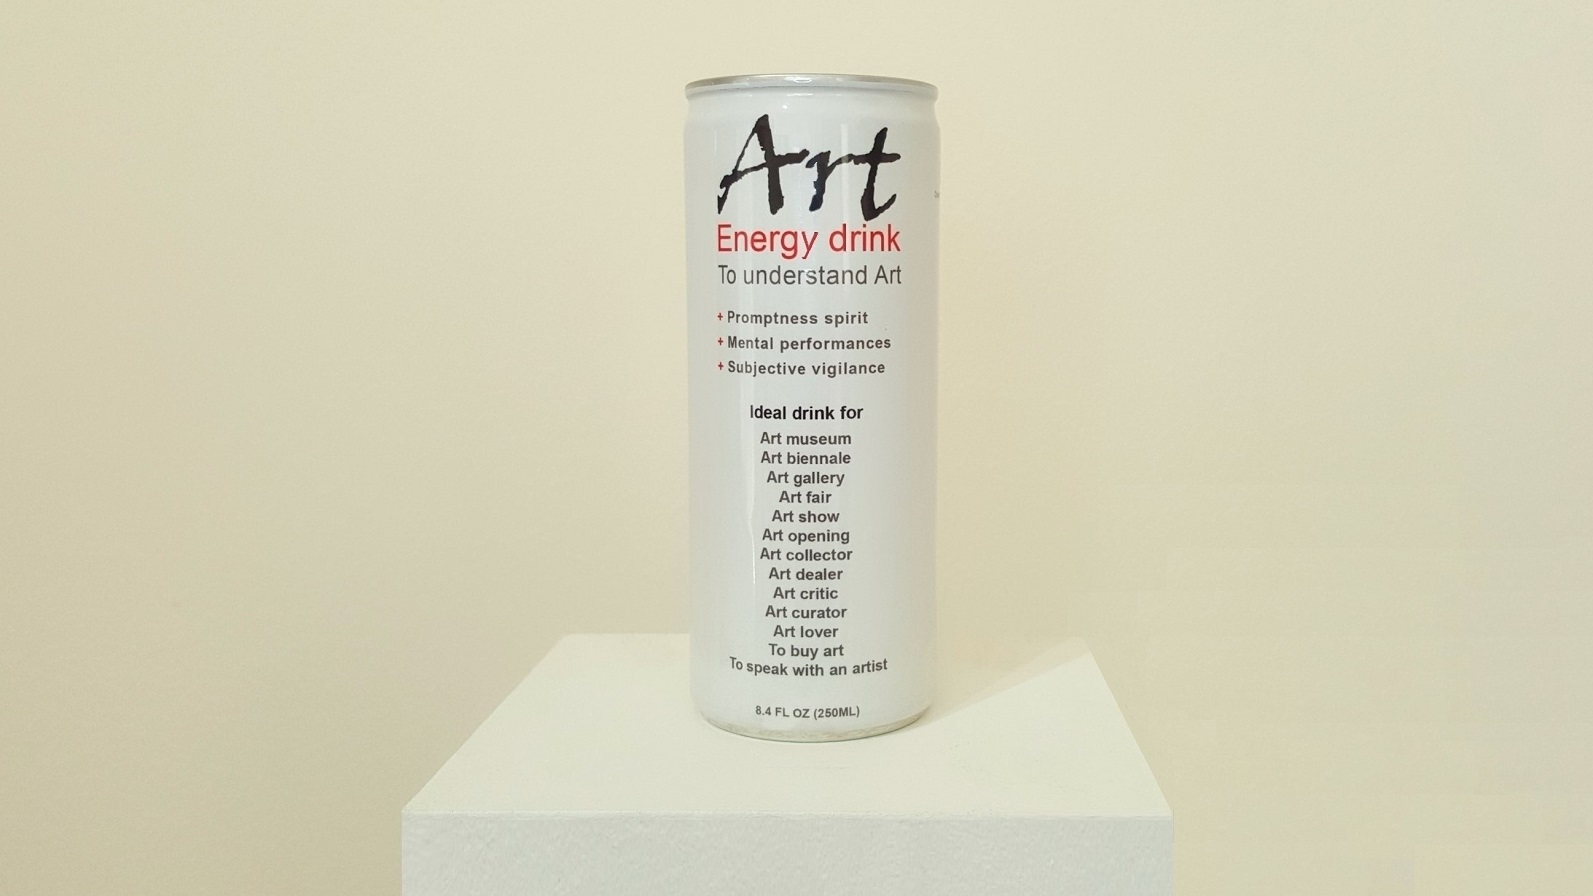 Klaus Guingand artwork "Art"energy drink